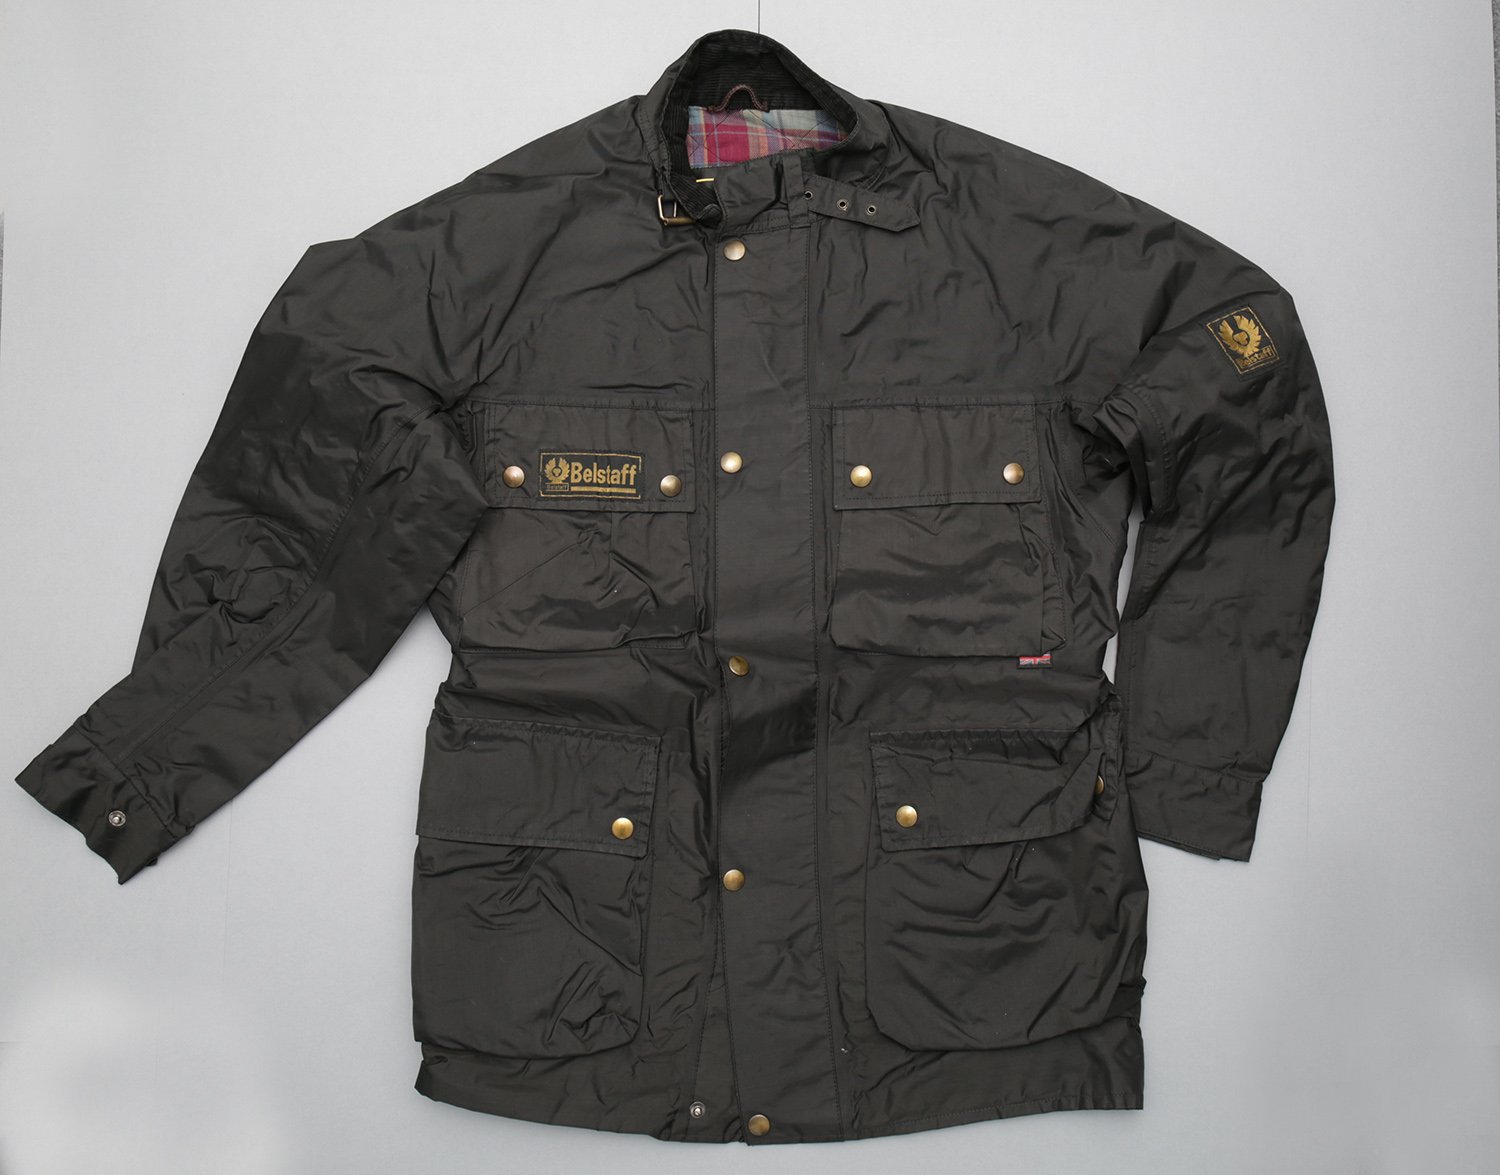 Belstaff NOS 1970s Nylon (waterproof) Jacket, Size M. SOLD — Men's File